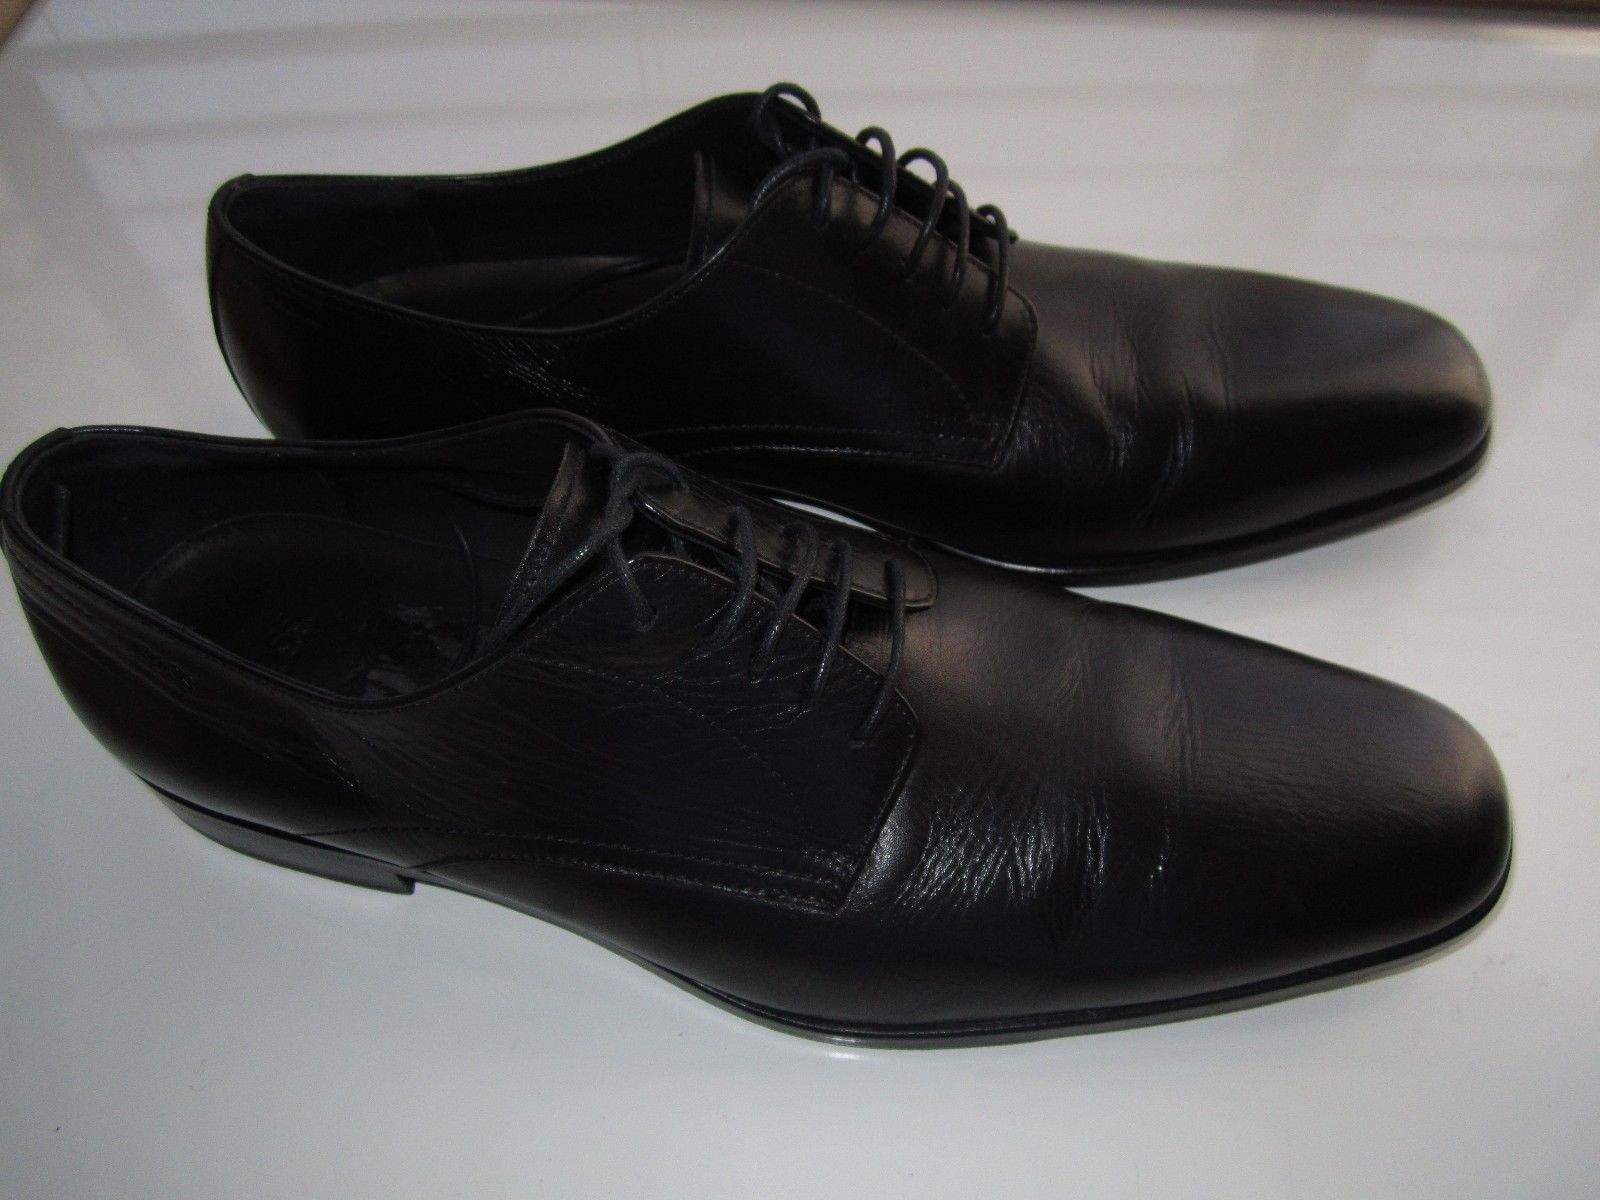 Boss Hugo Boss Verocuoio Genuine Leather Oxfords Men’s Shoes Black 11M to11.5D - $142.49